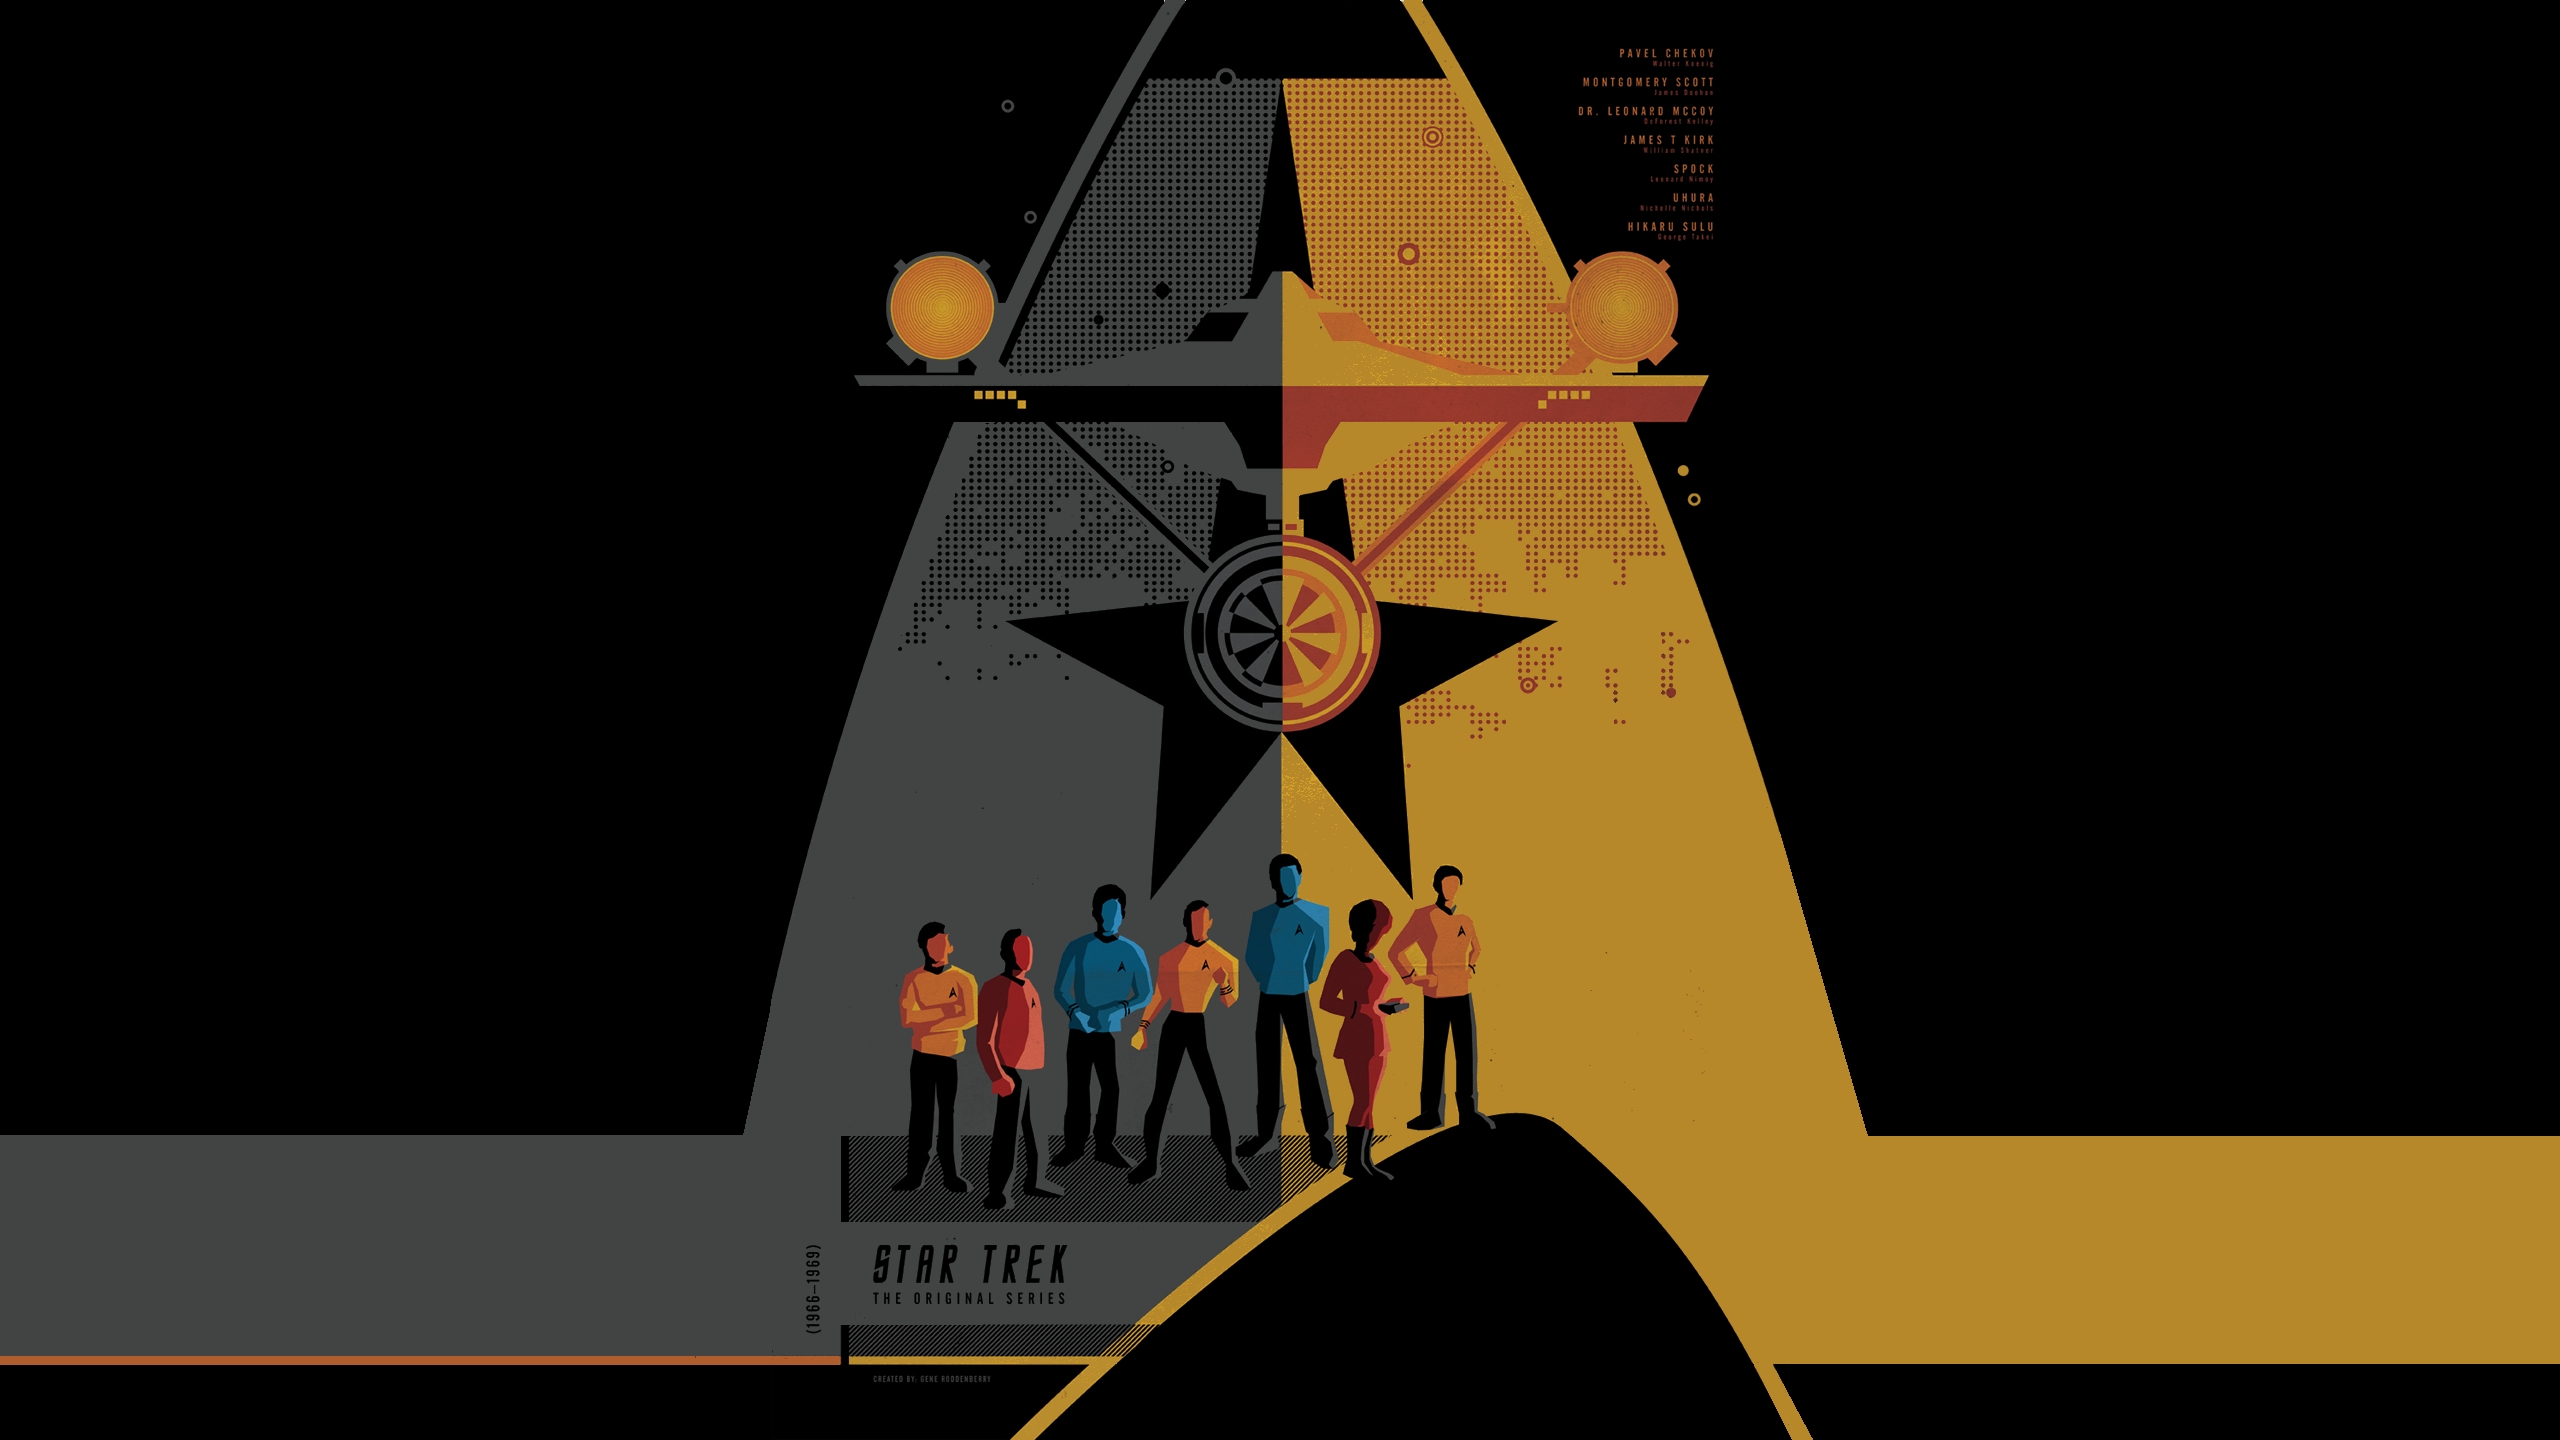 Star Trek Tos Wallpaper Best In High